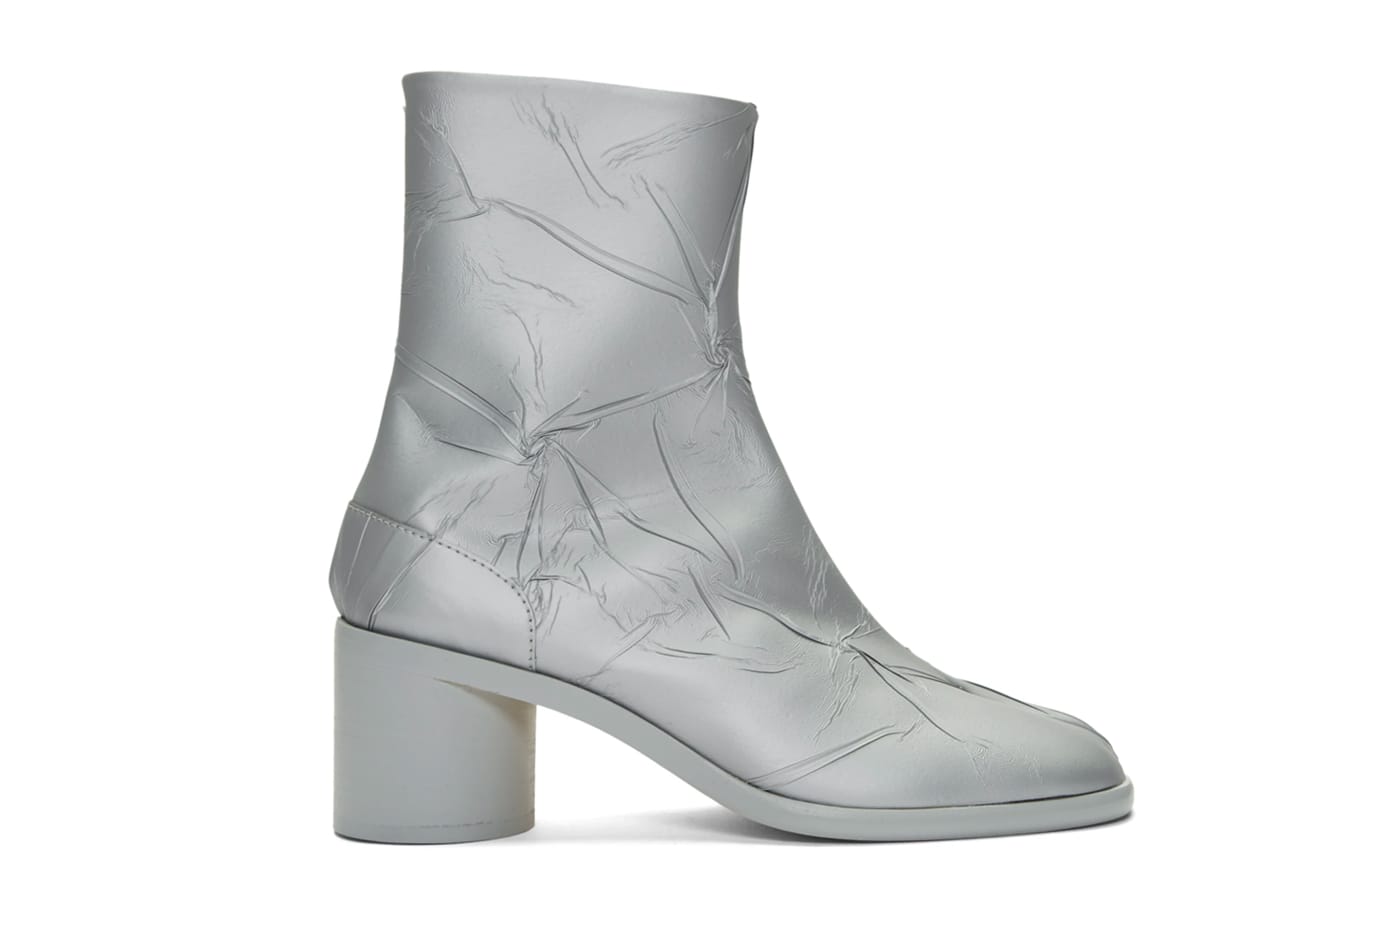 Maison Margiela Silver Metallic Tabi Boots Release | Hypebeast